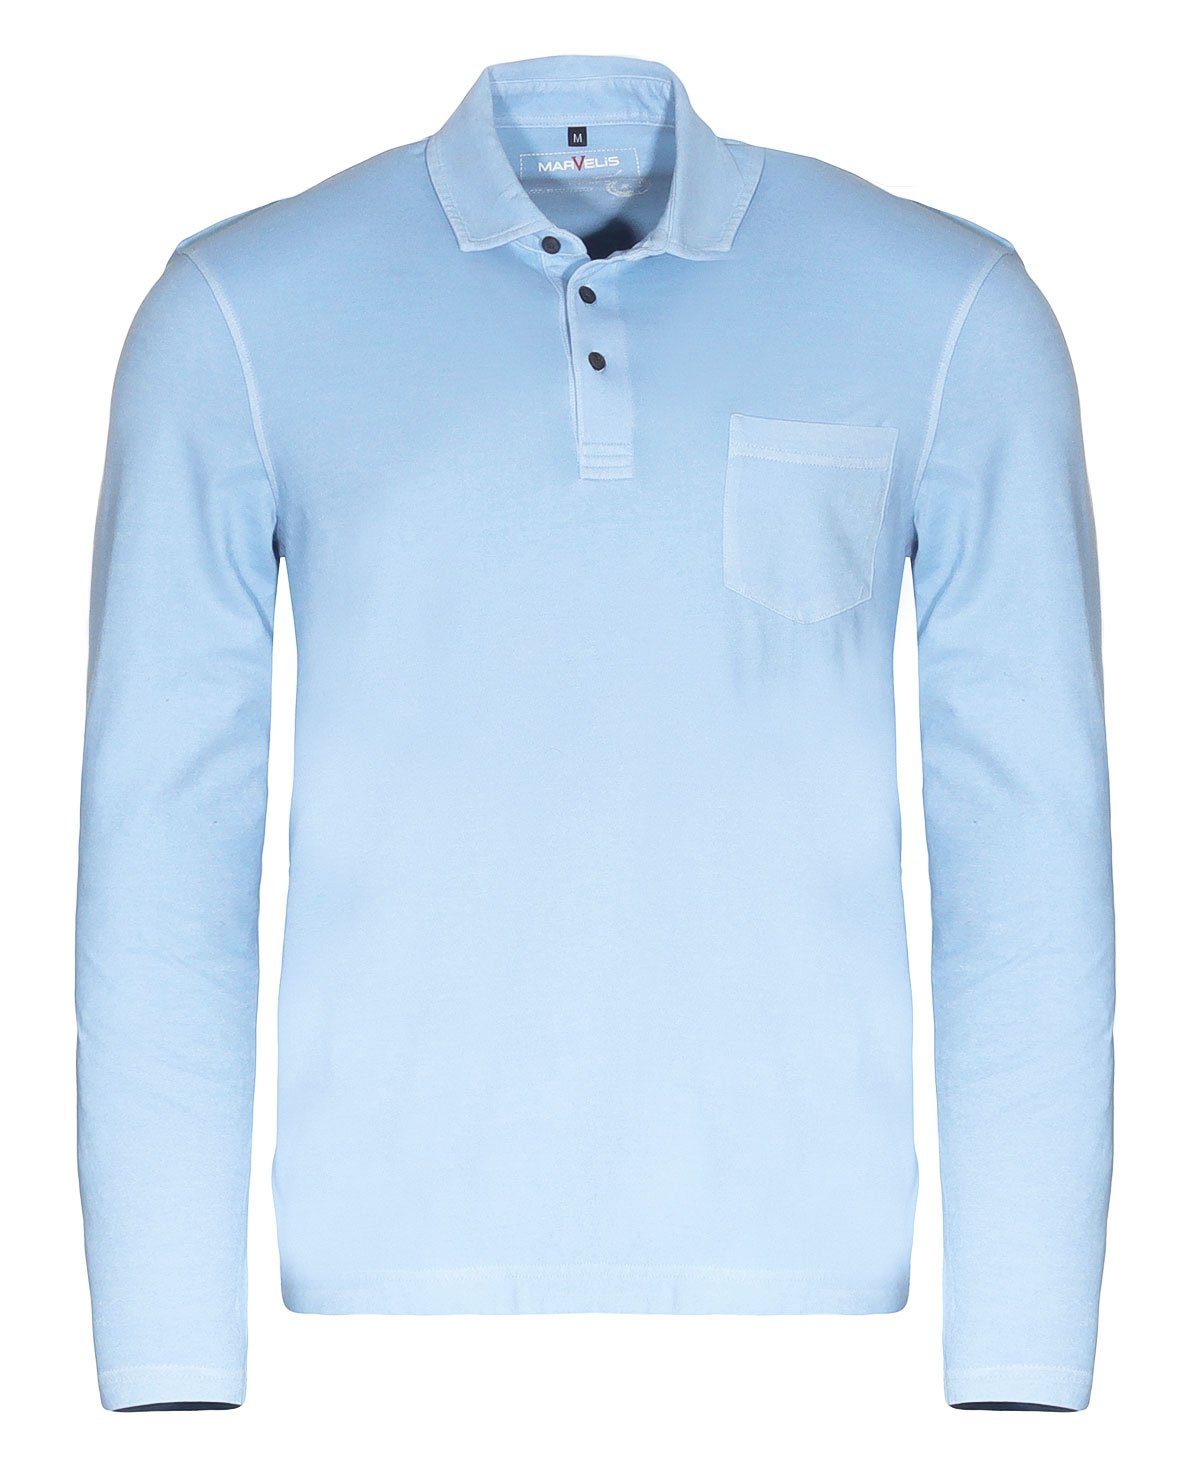 MARVELIS Poloshirt Poloshirt - Casual Fit - Polokragen - Einfarbig - Hellblau